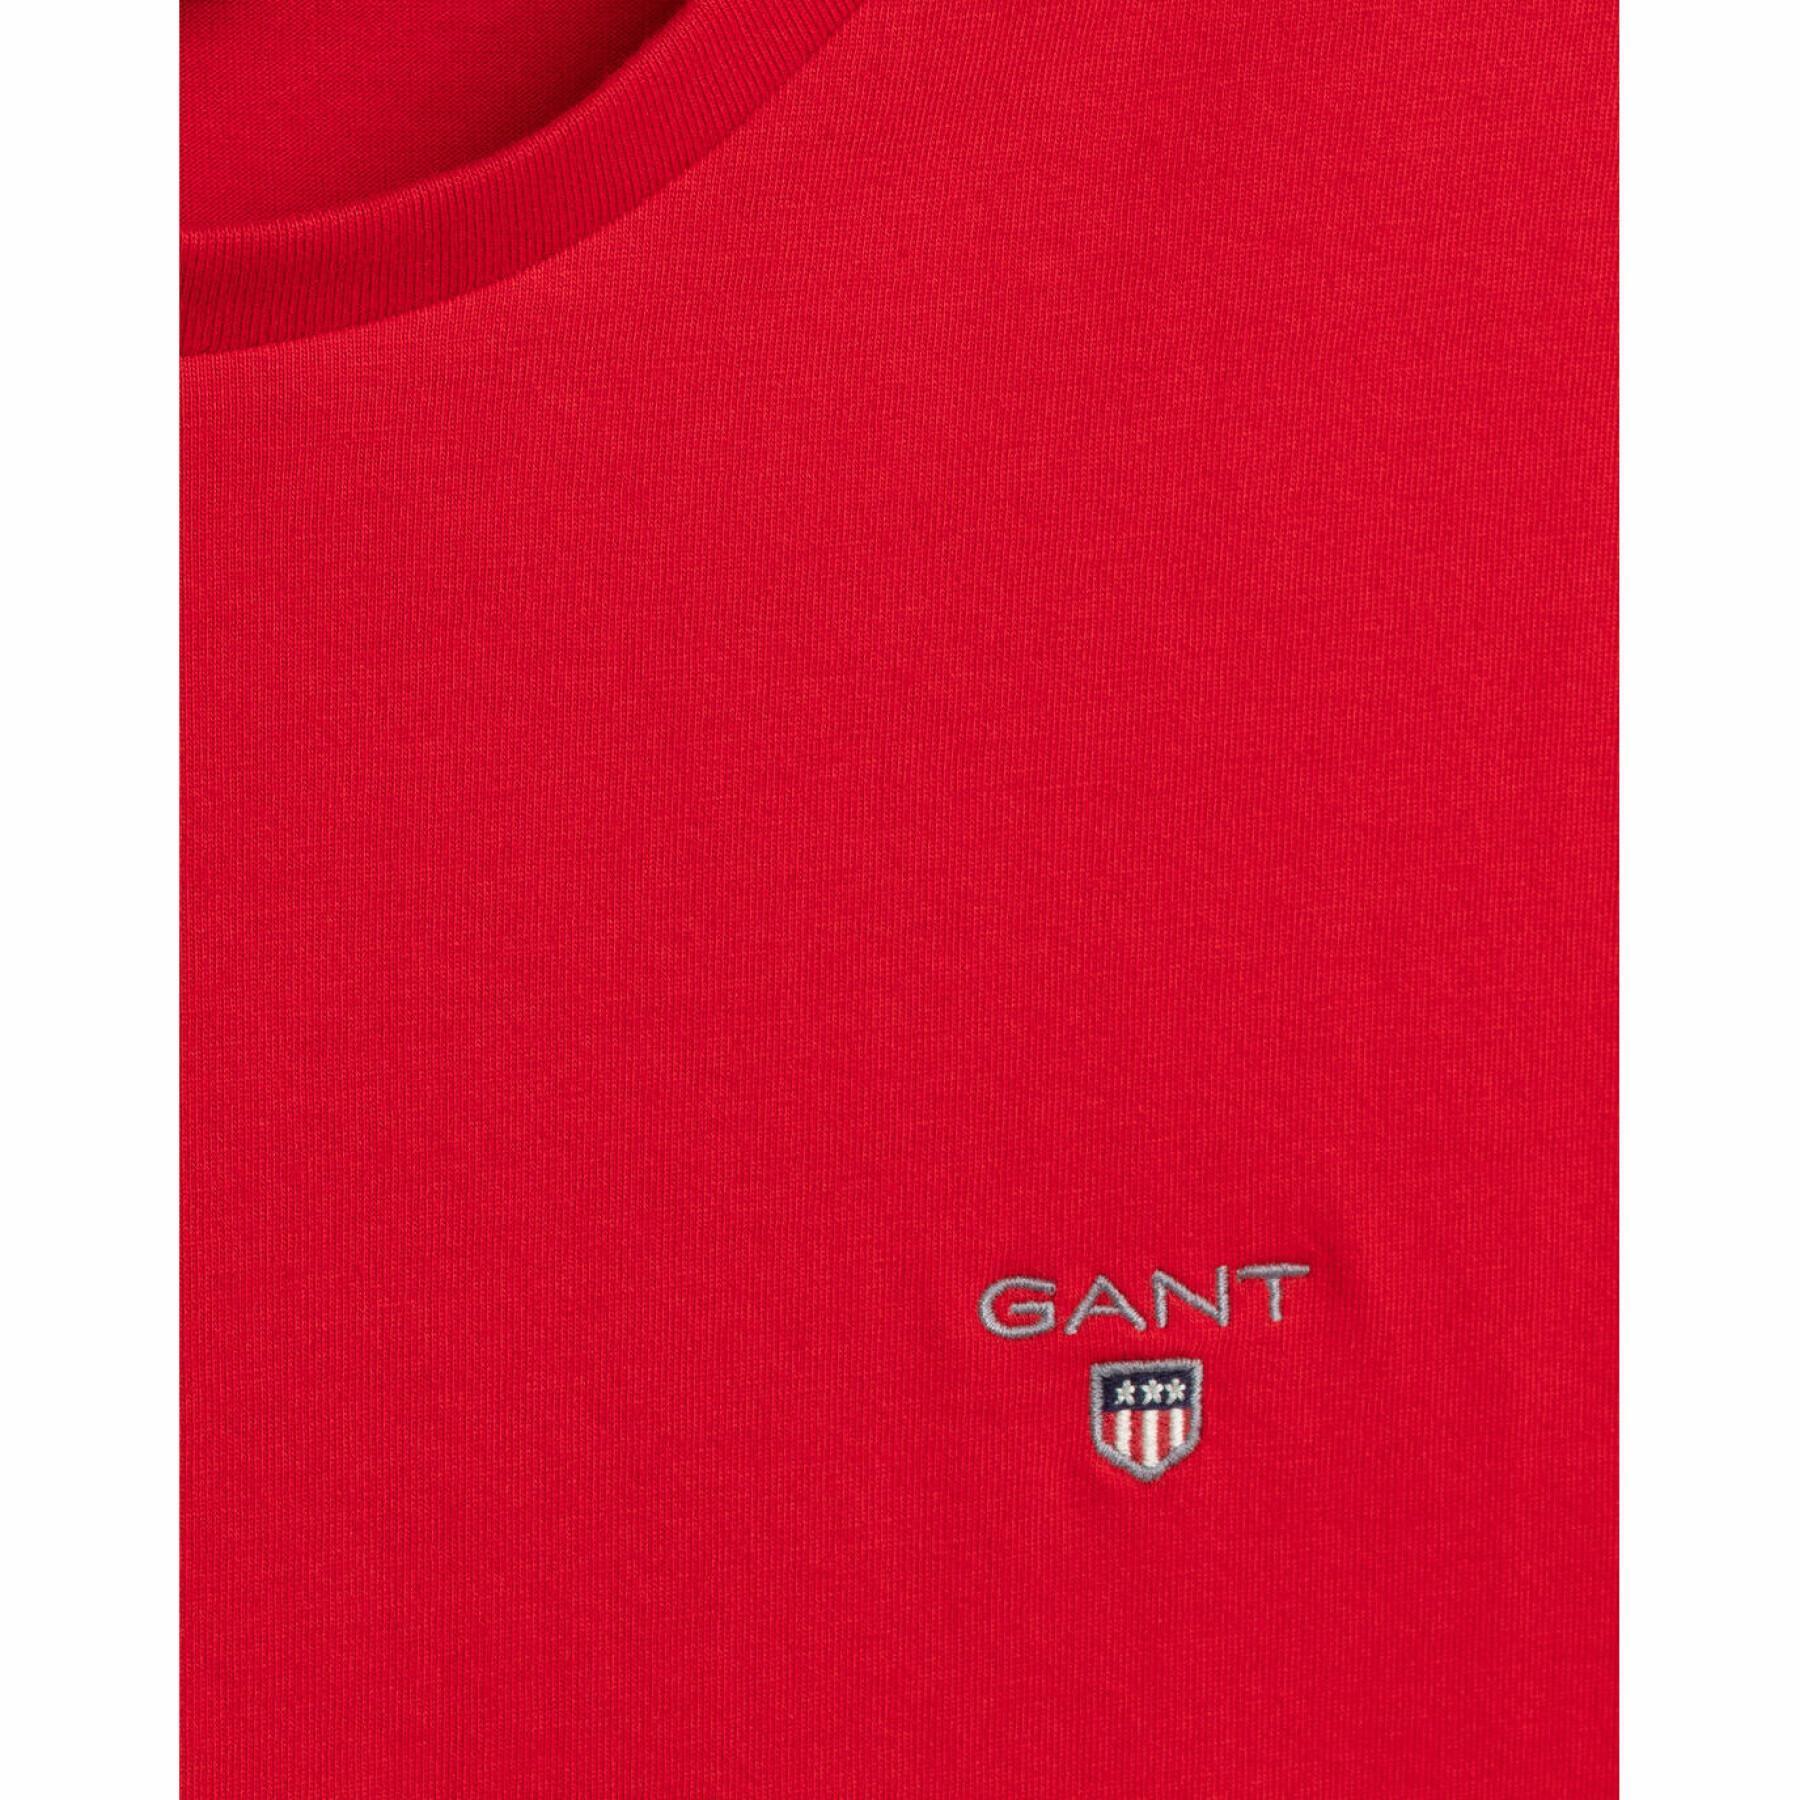 T-shirt Gant Original